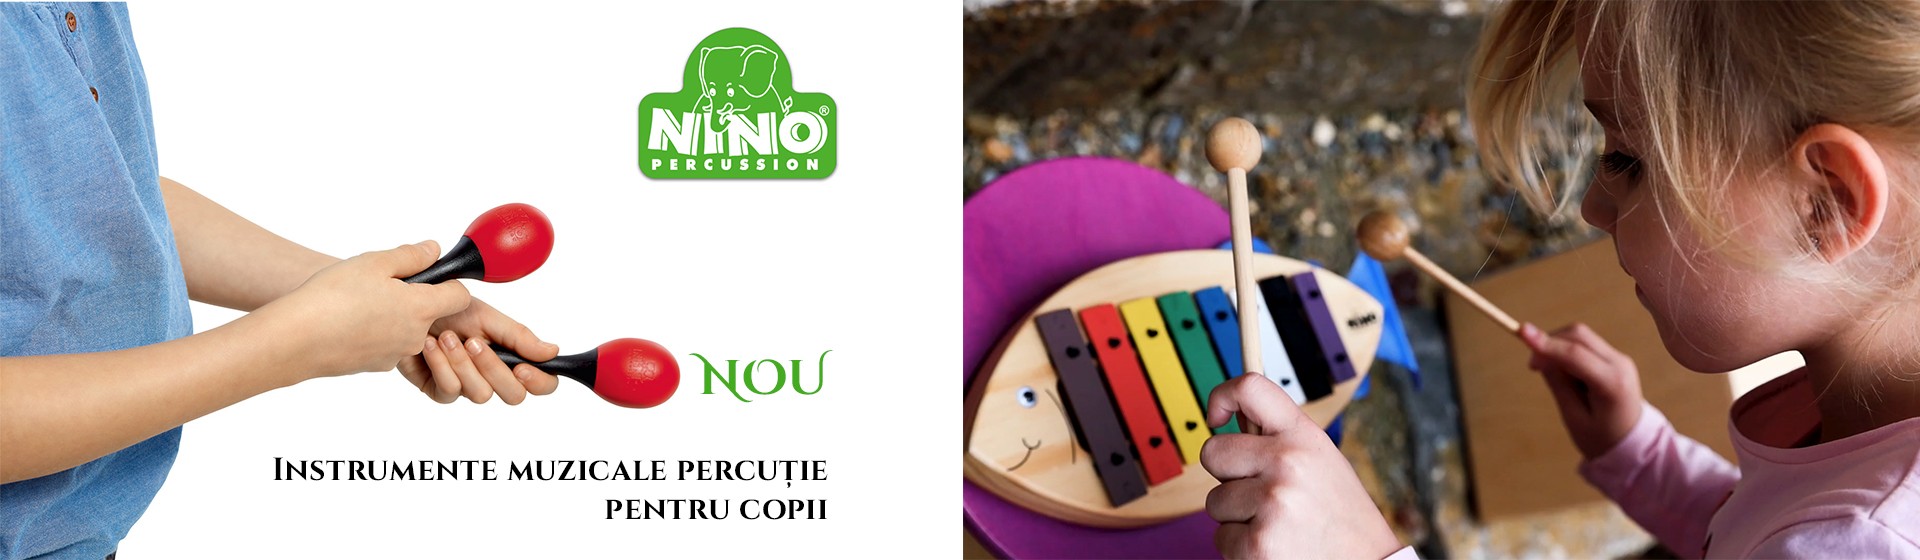 Instrumente Muzicale Percutie pentru Copii